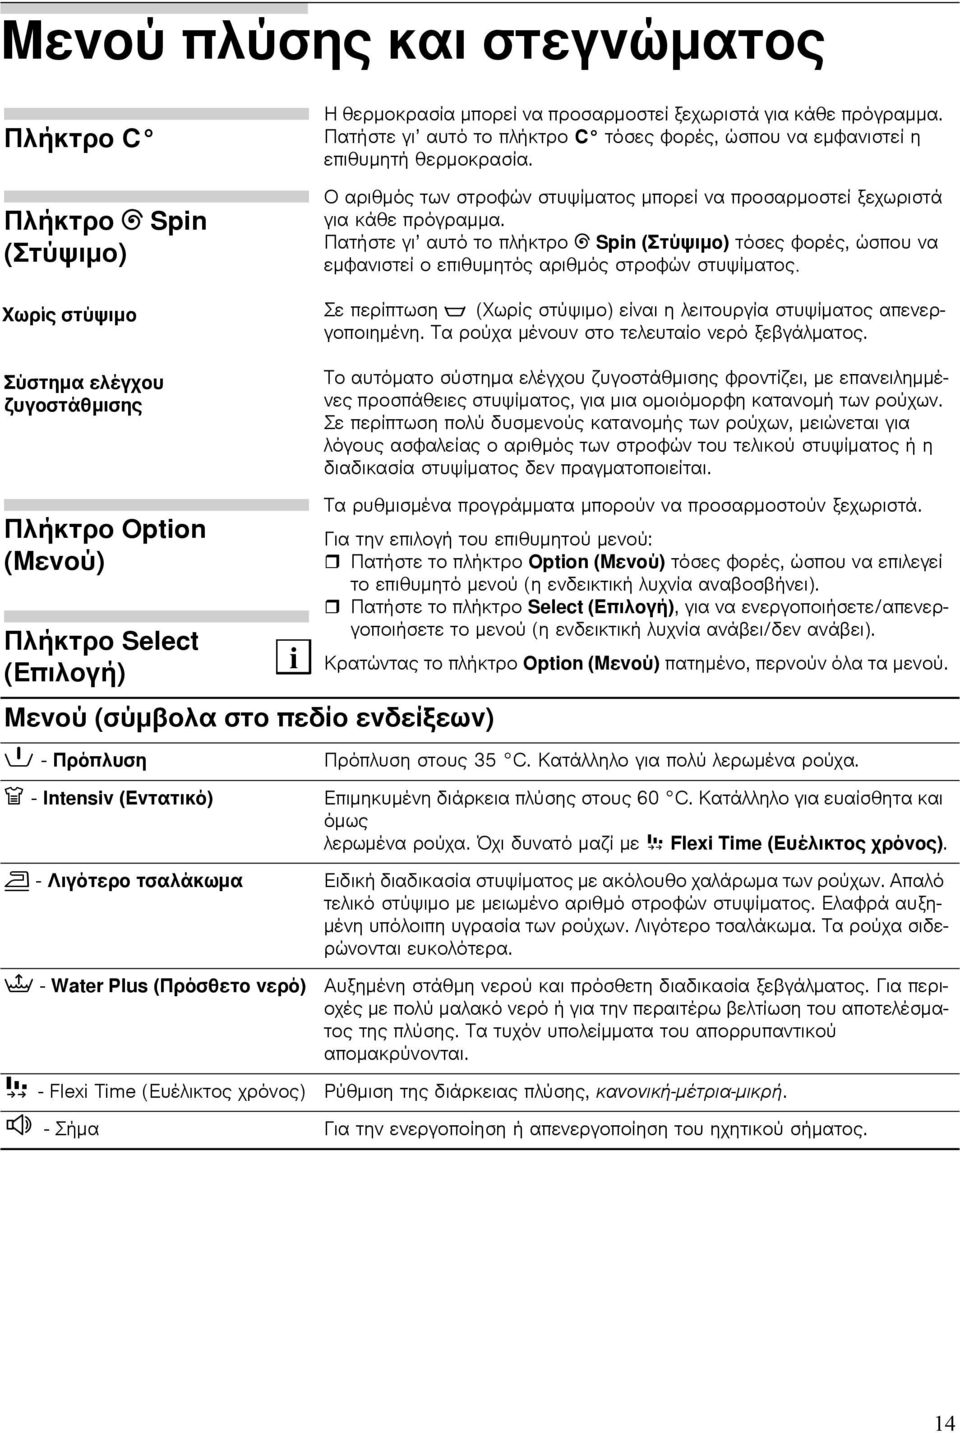 SIEMENS. Οδηγίες χρήσης el. πλυντήριο-στεγνωτήριο - PDF Free Download